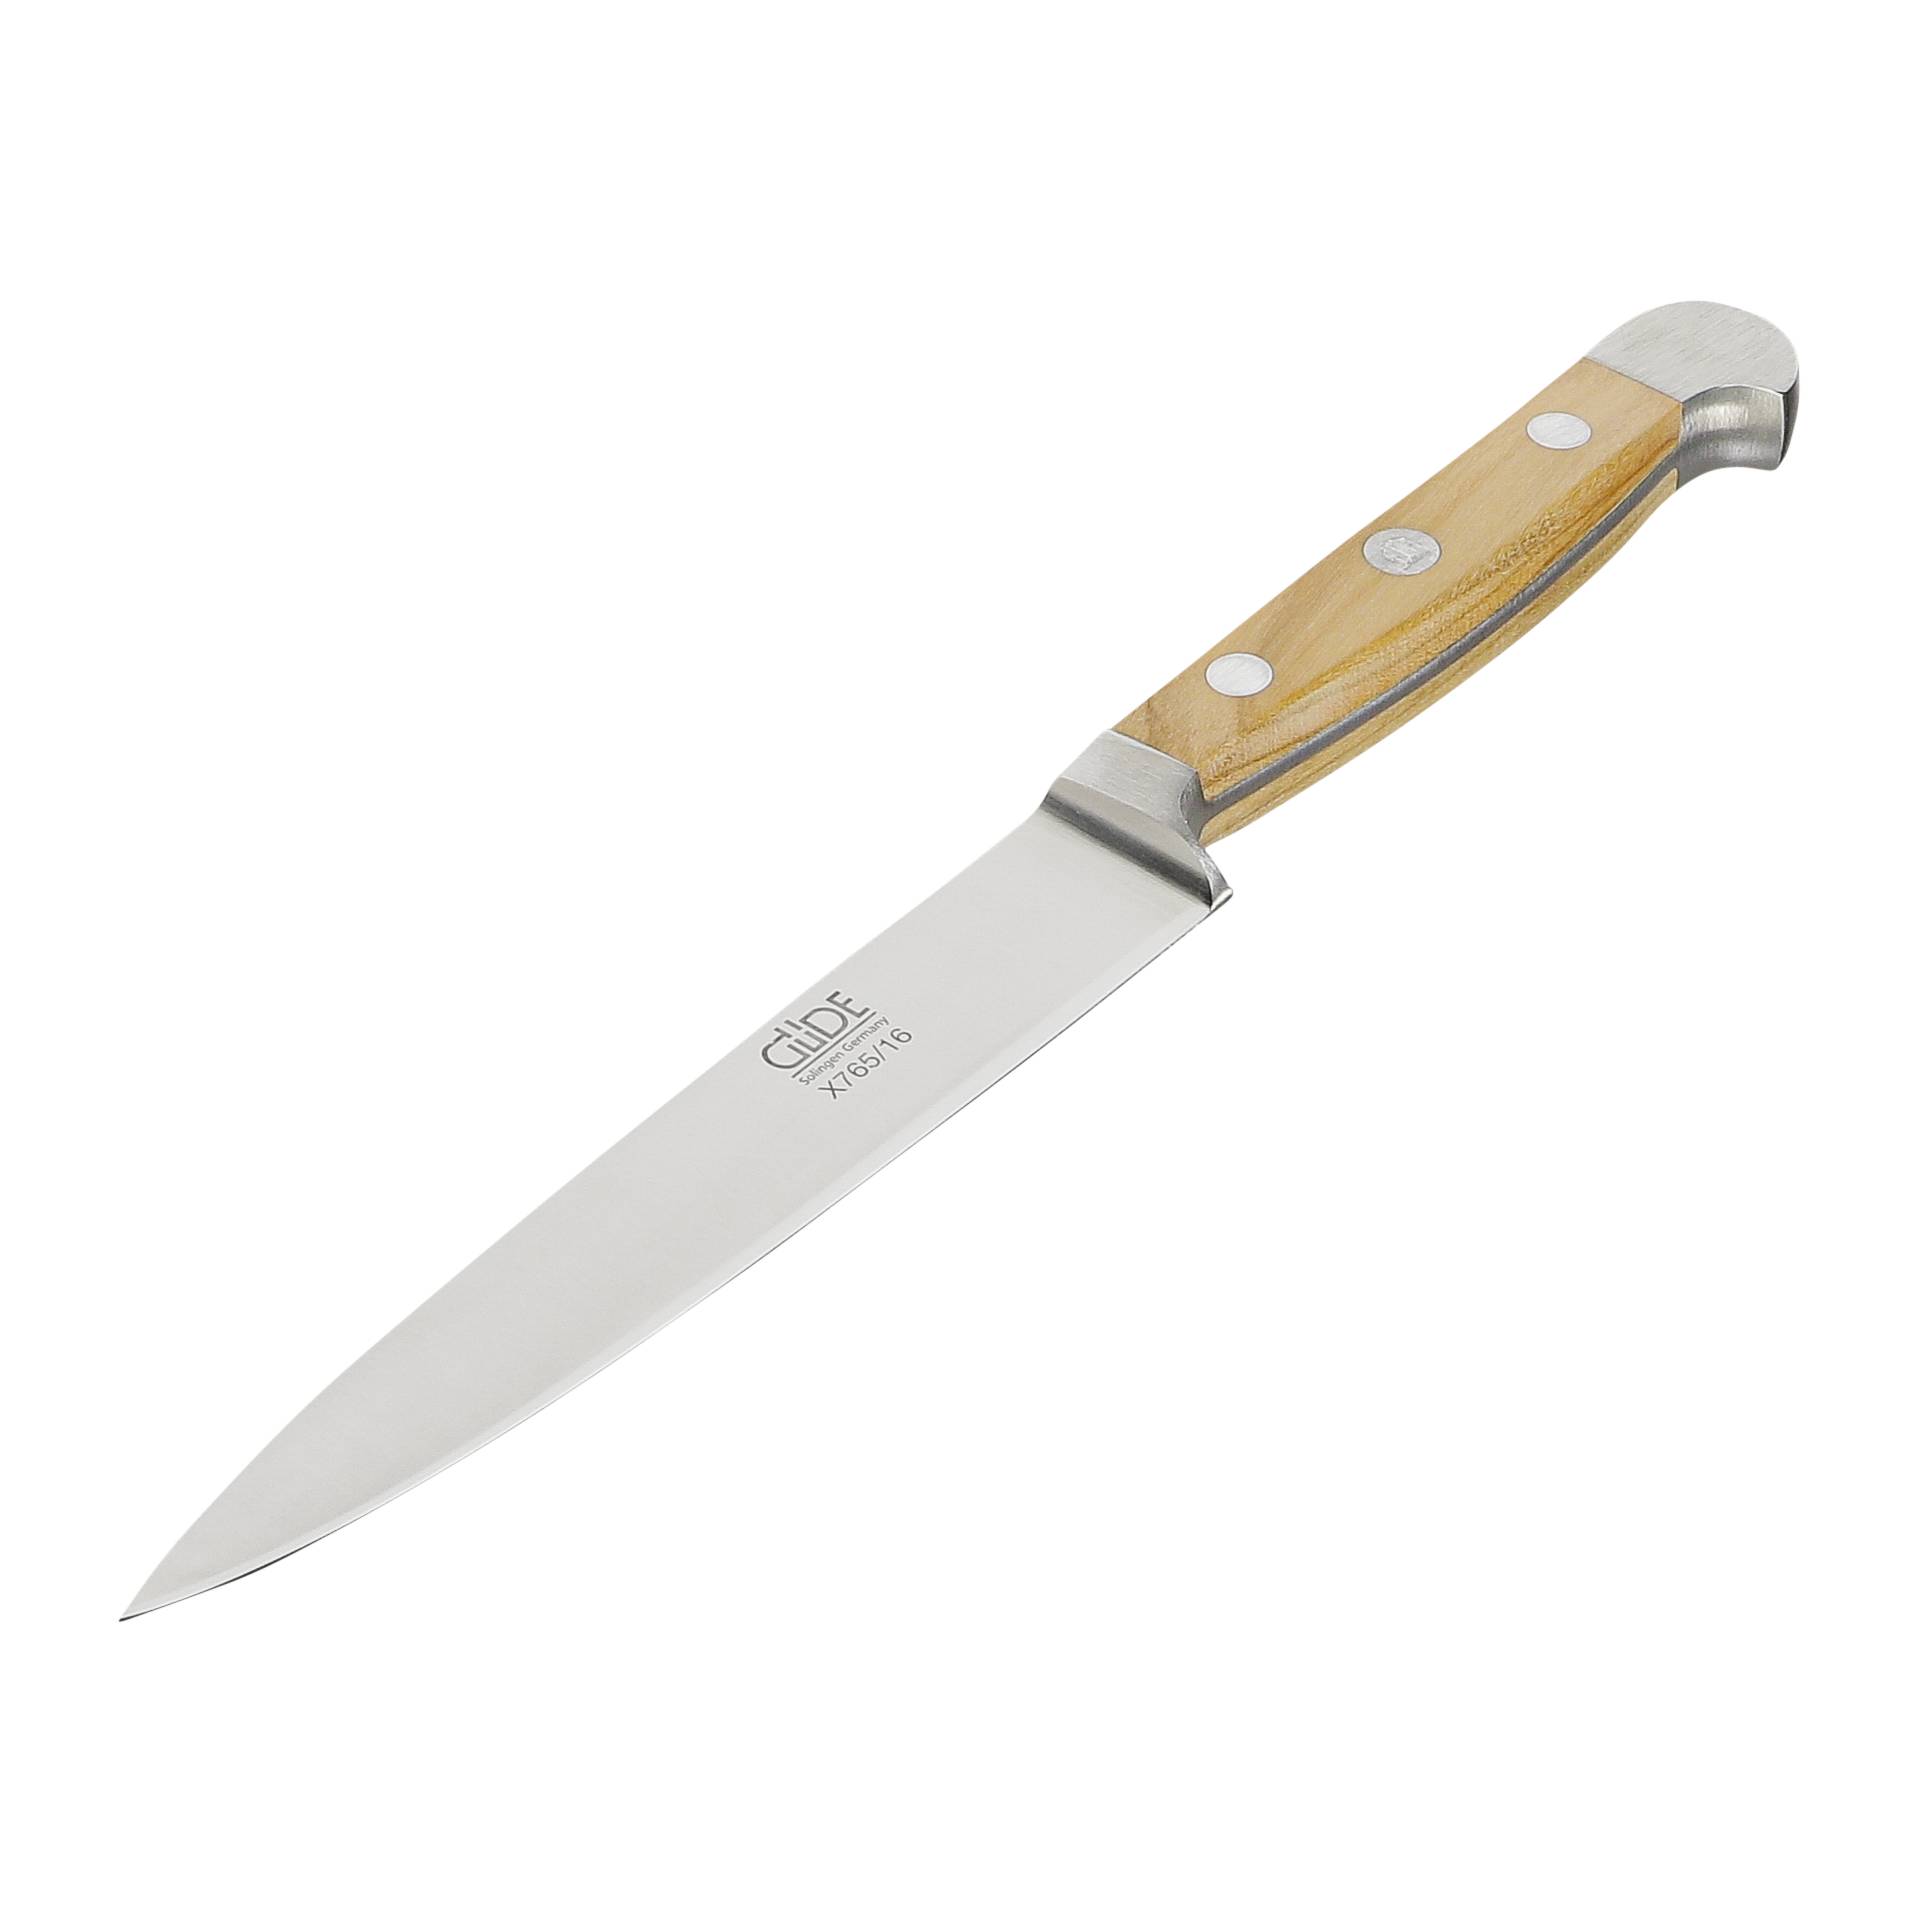 Güde Alpha Universal Knife 16 cm Olive Wood